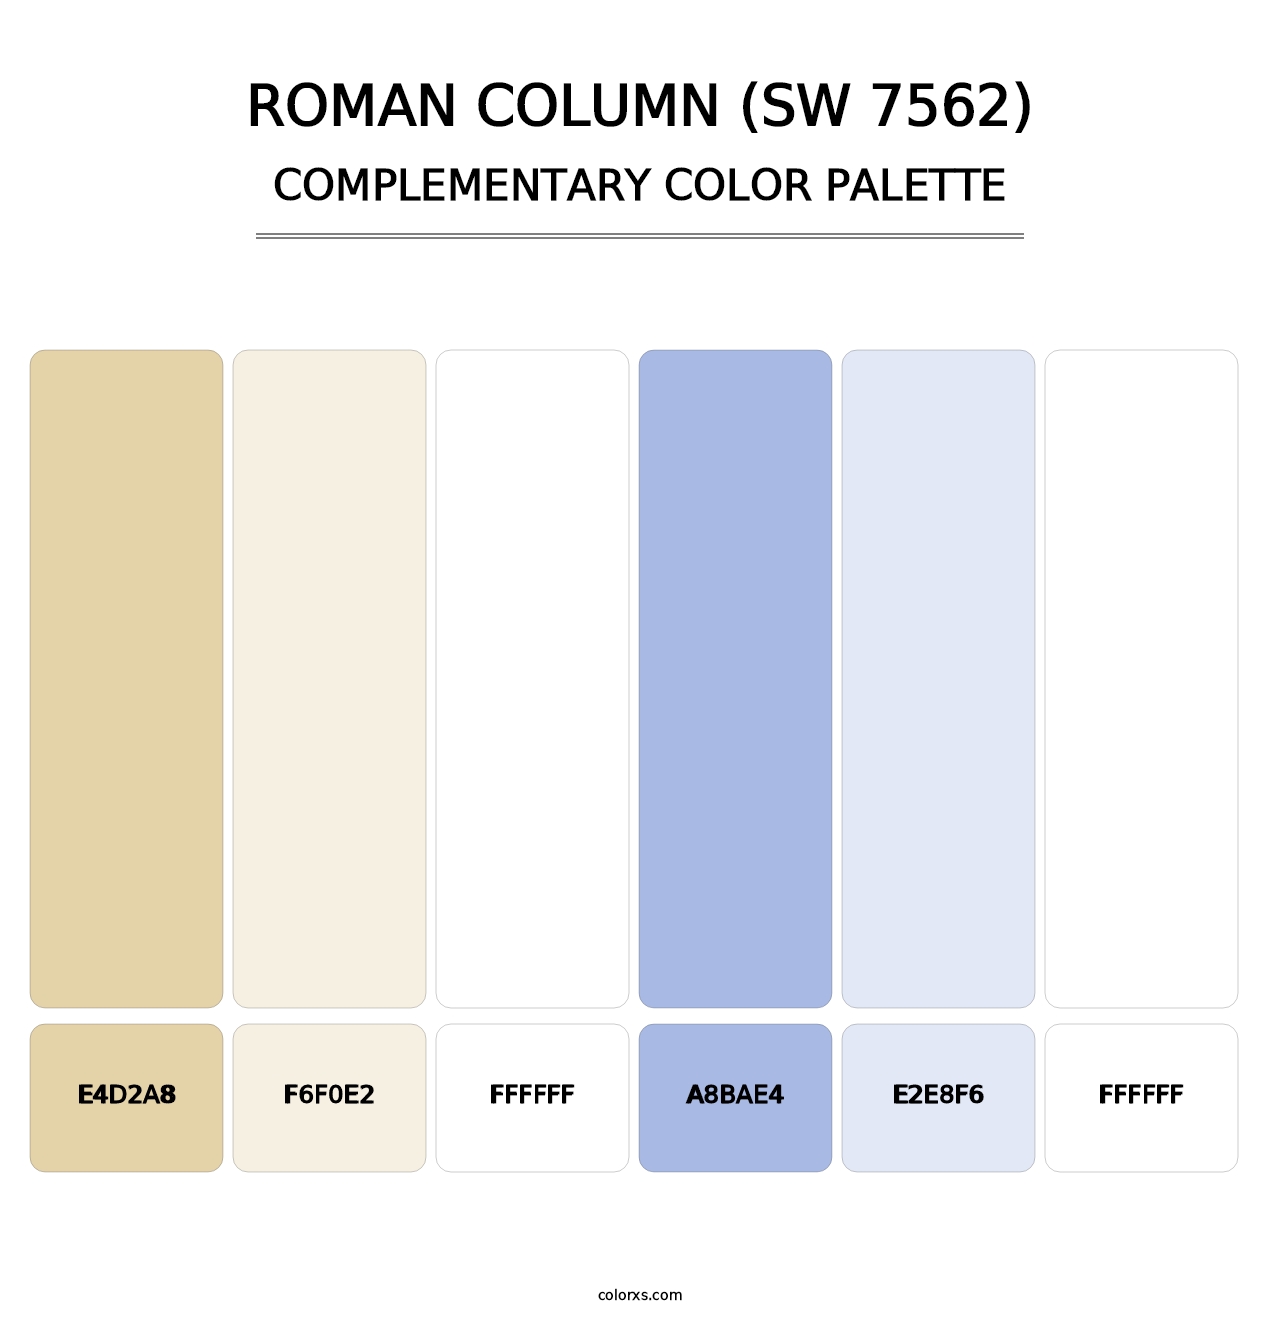 Roman Column (SW 7562) - Complementary Color Palette